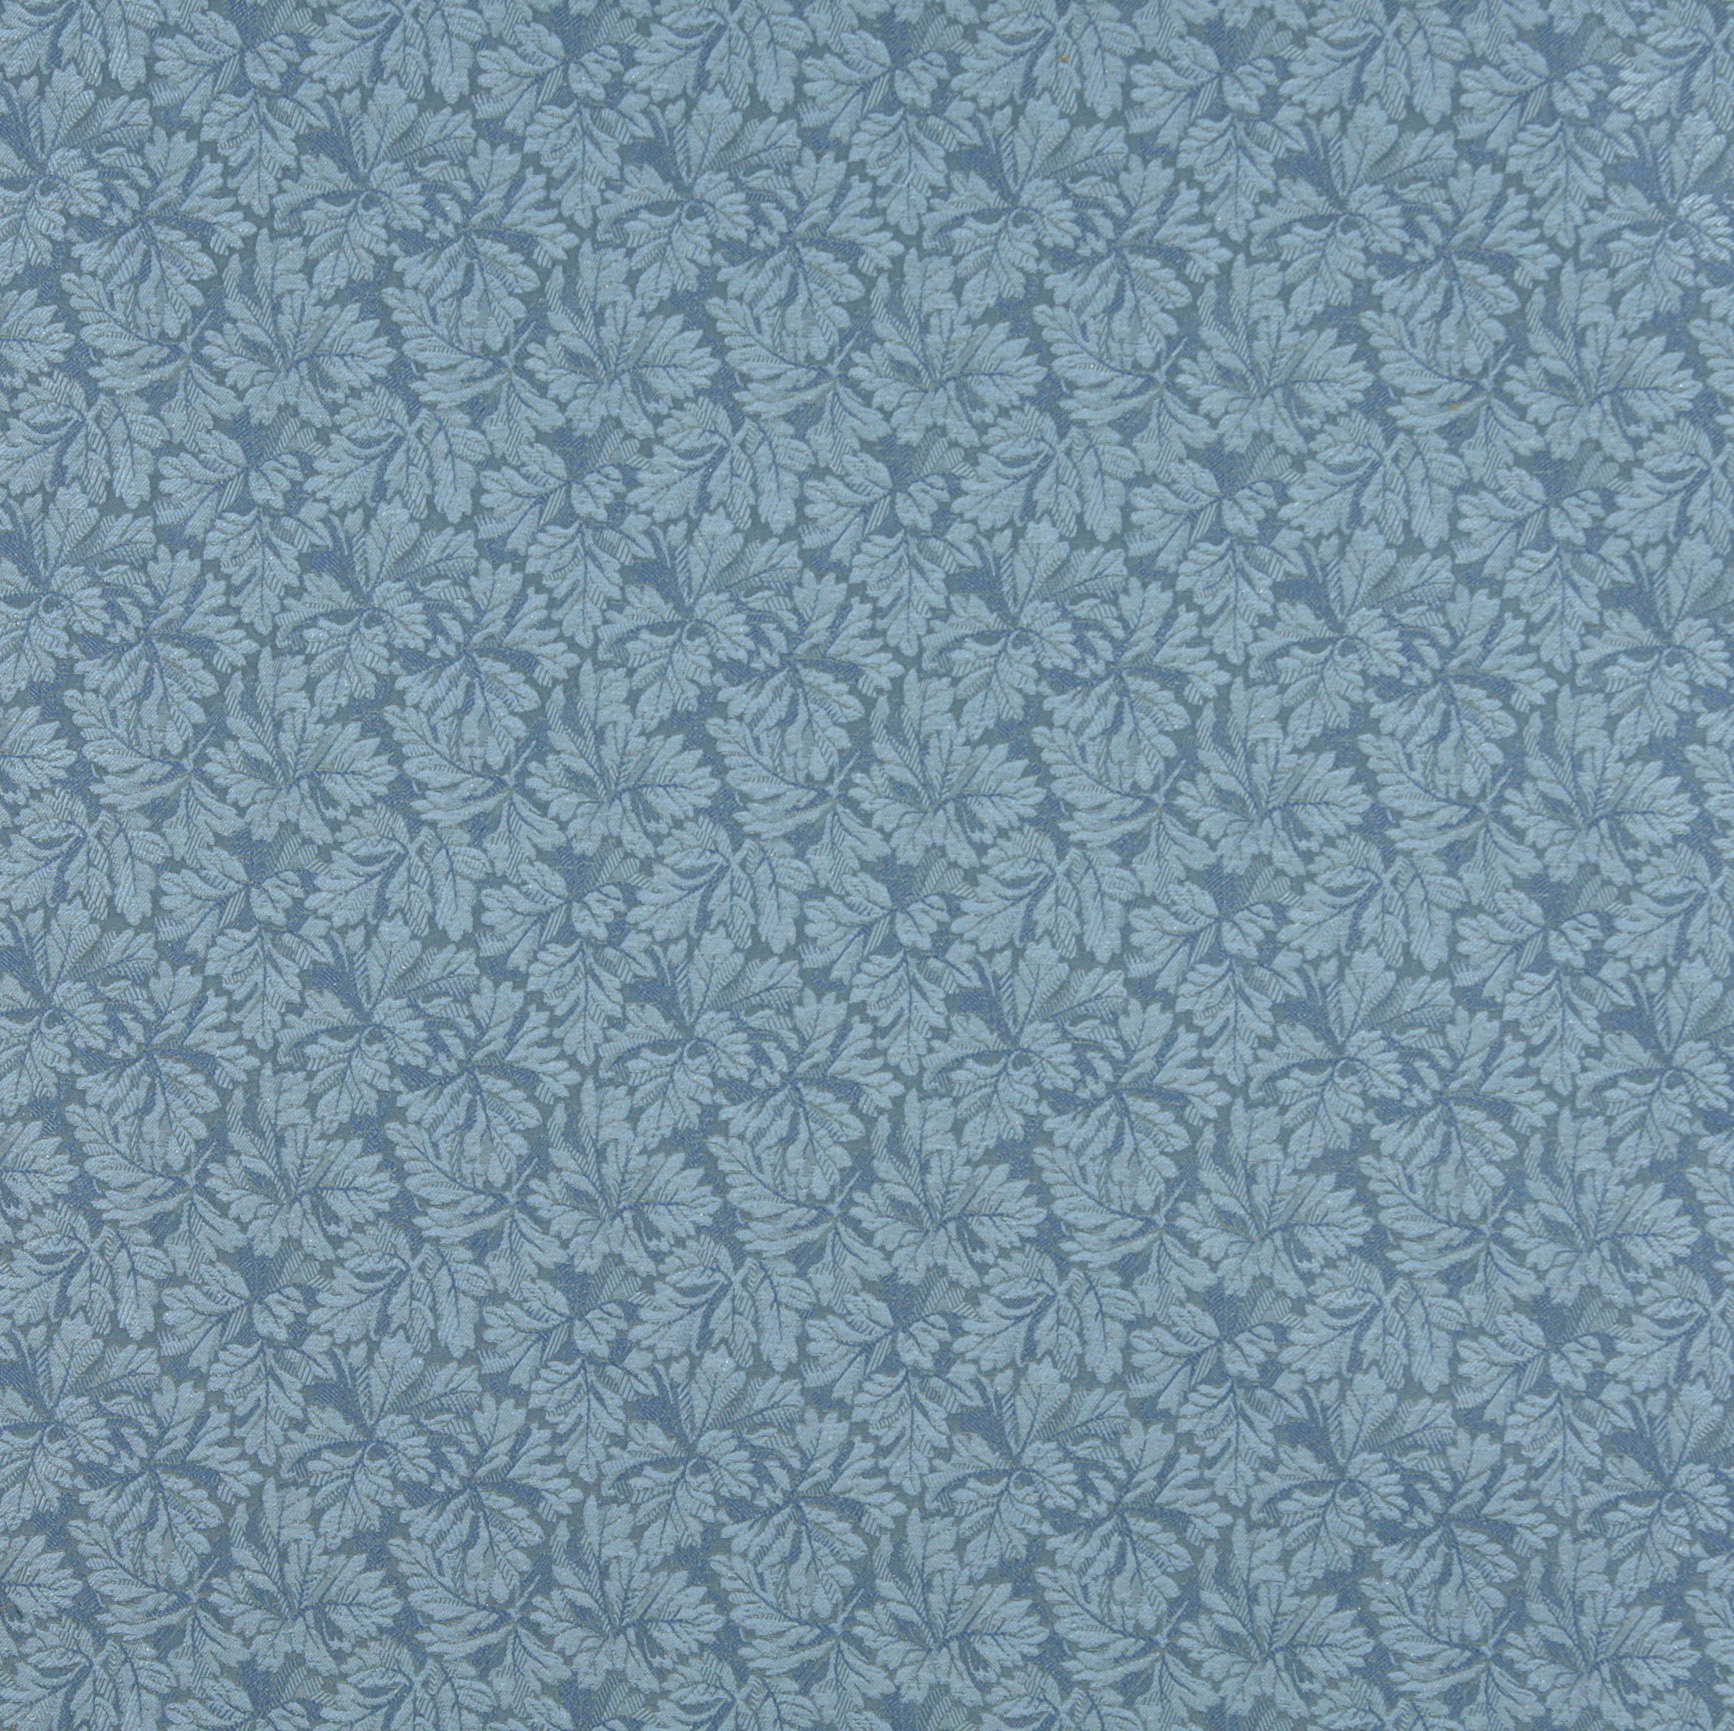 K7141 DUSTY BLUE upholstery fabric. 